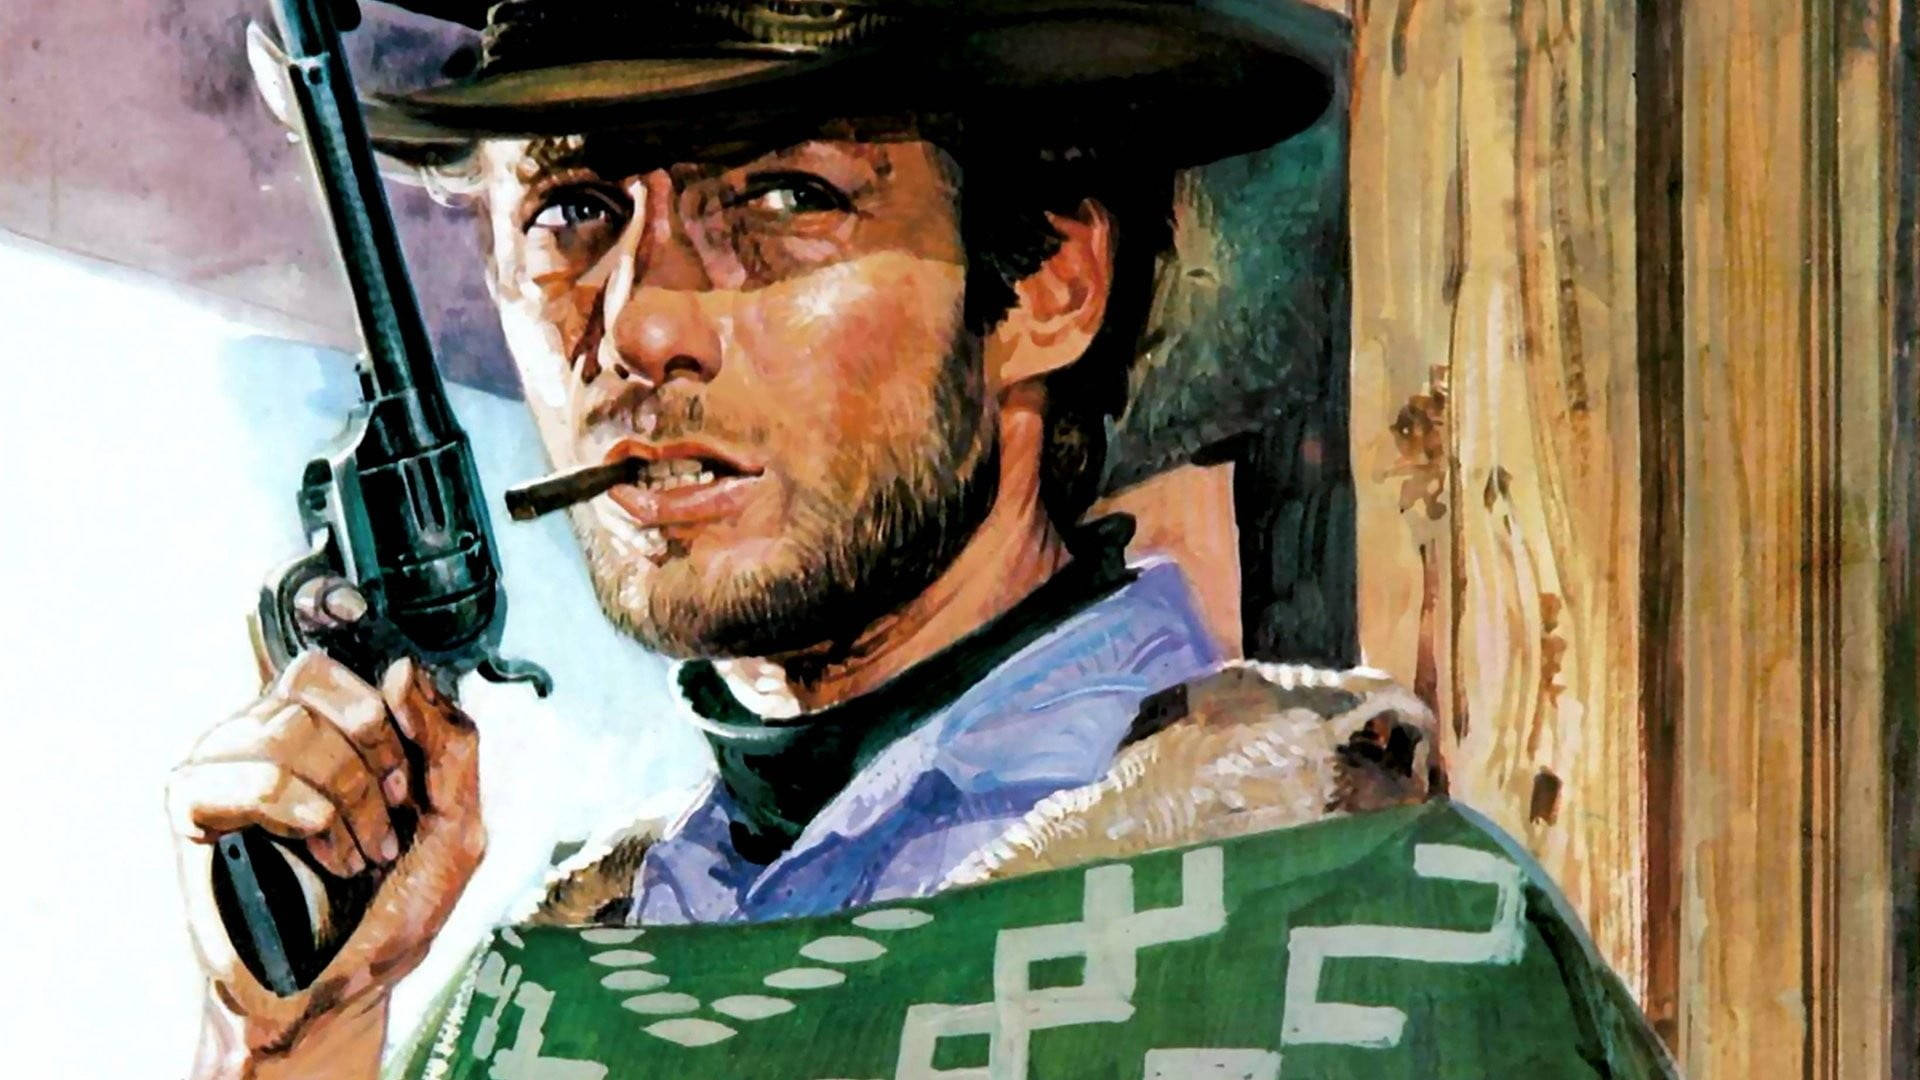 Clint Eastwood - A Legend Of Western Cinema Background